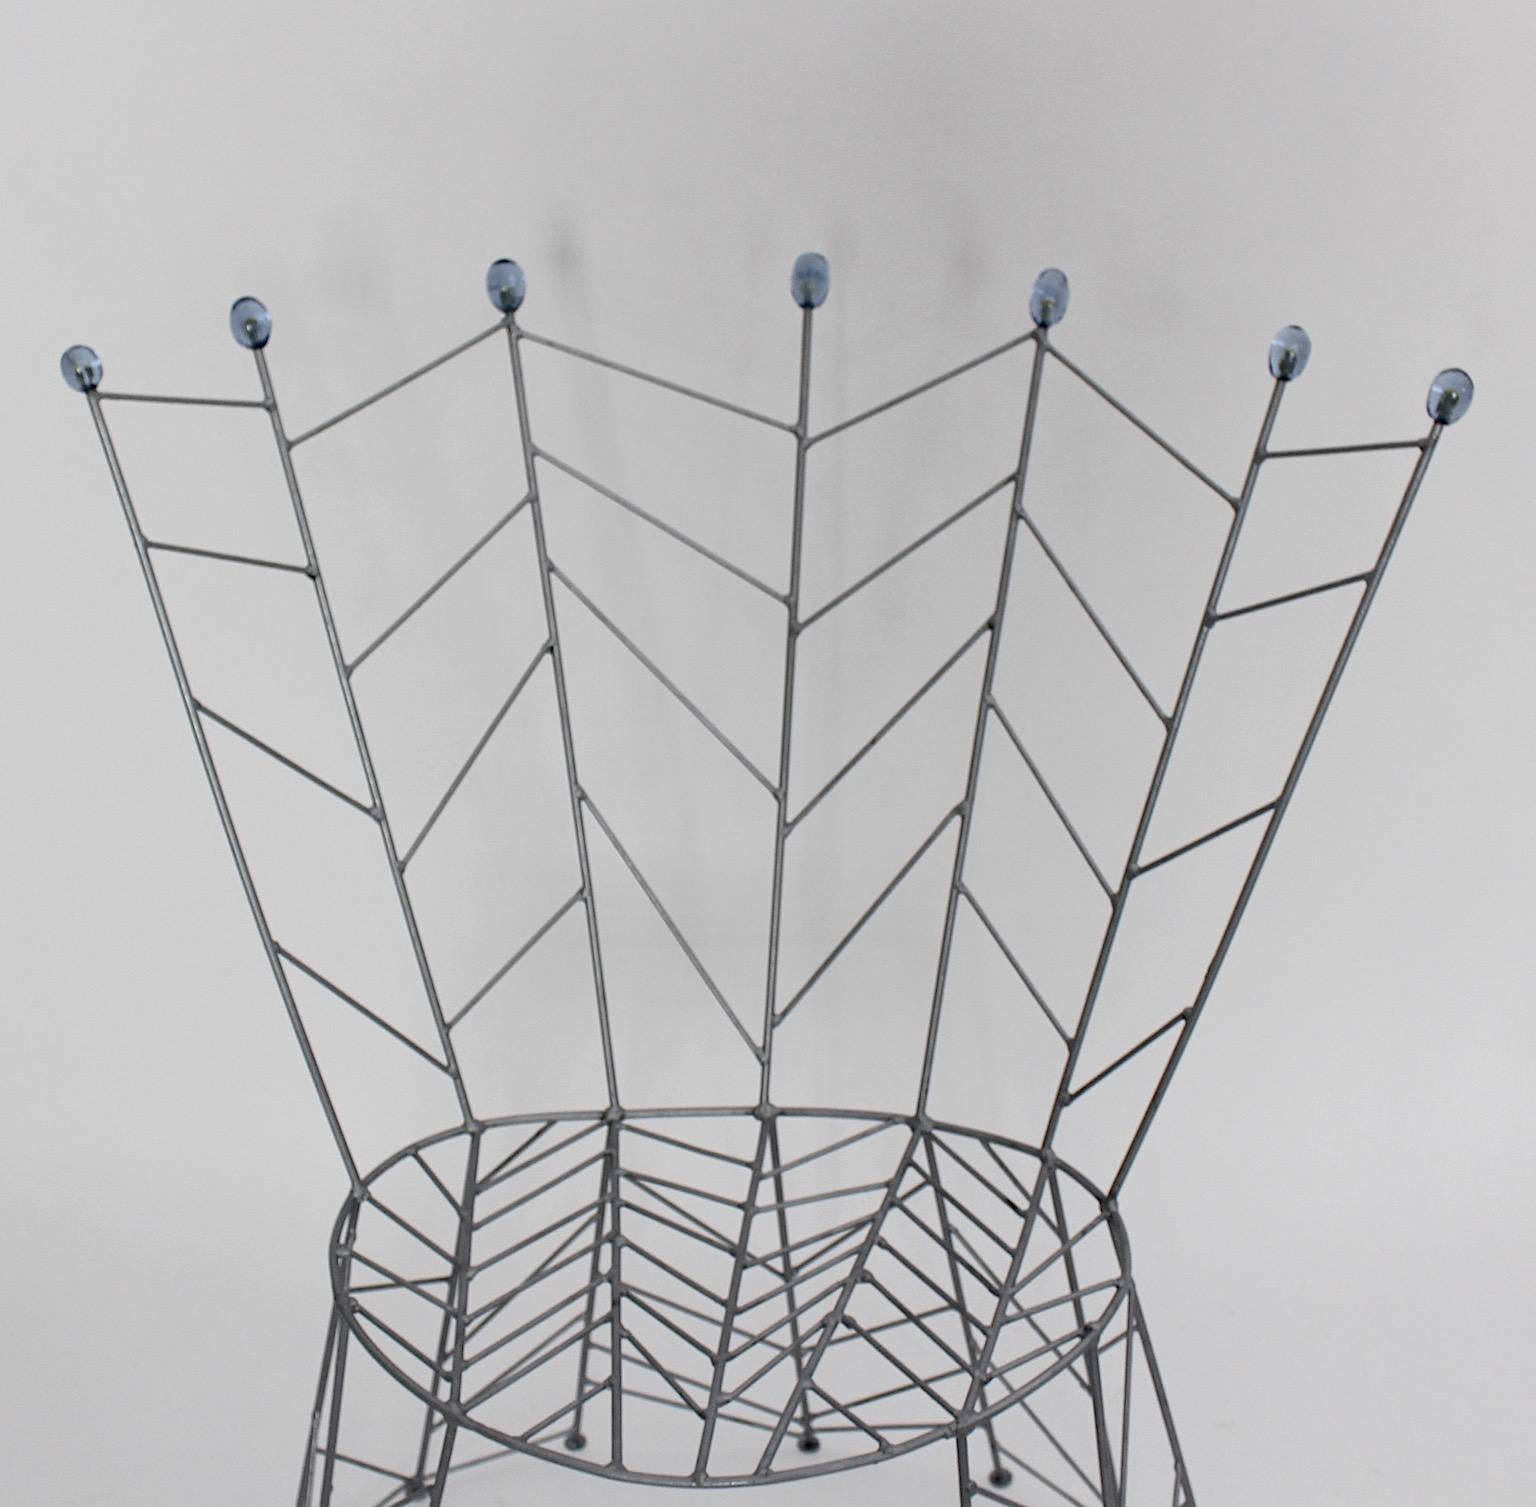 Sculptural Organic Vintage Side Chairs Pair Bohuslav Horak 1988 Czech Republic For Sale 7